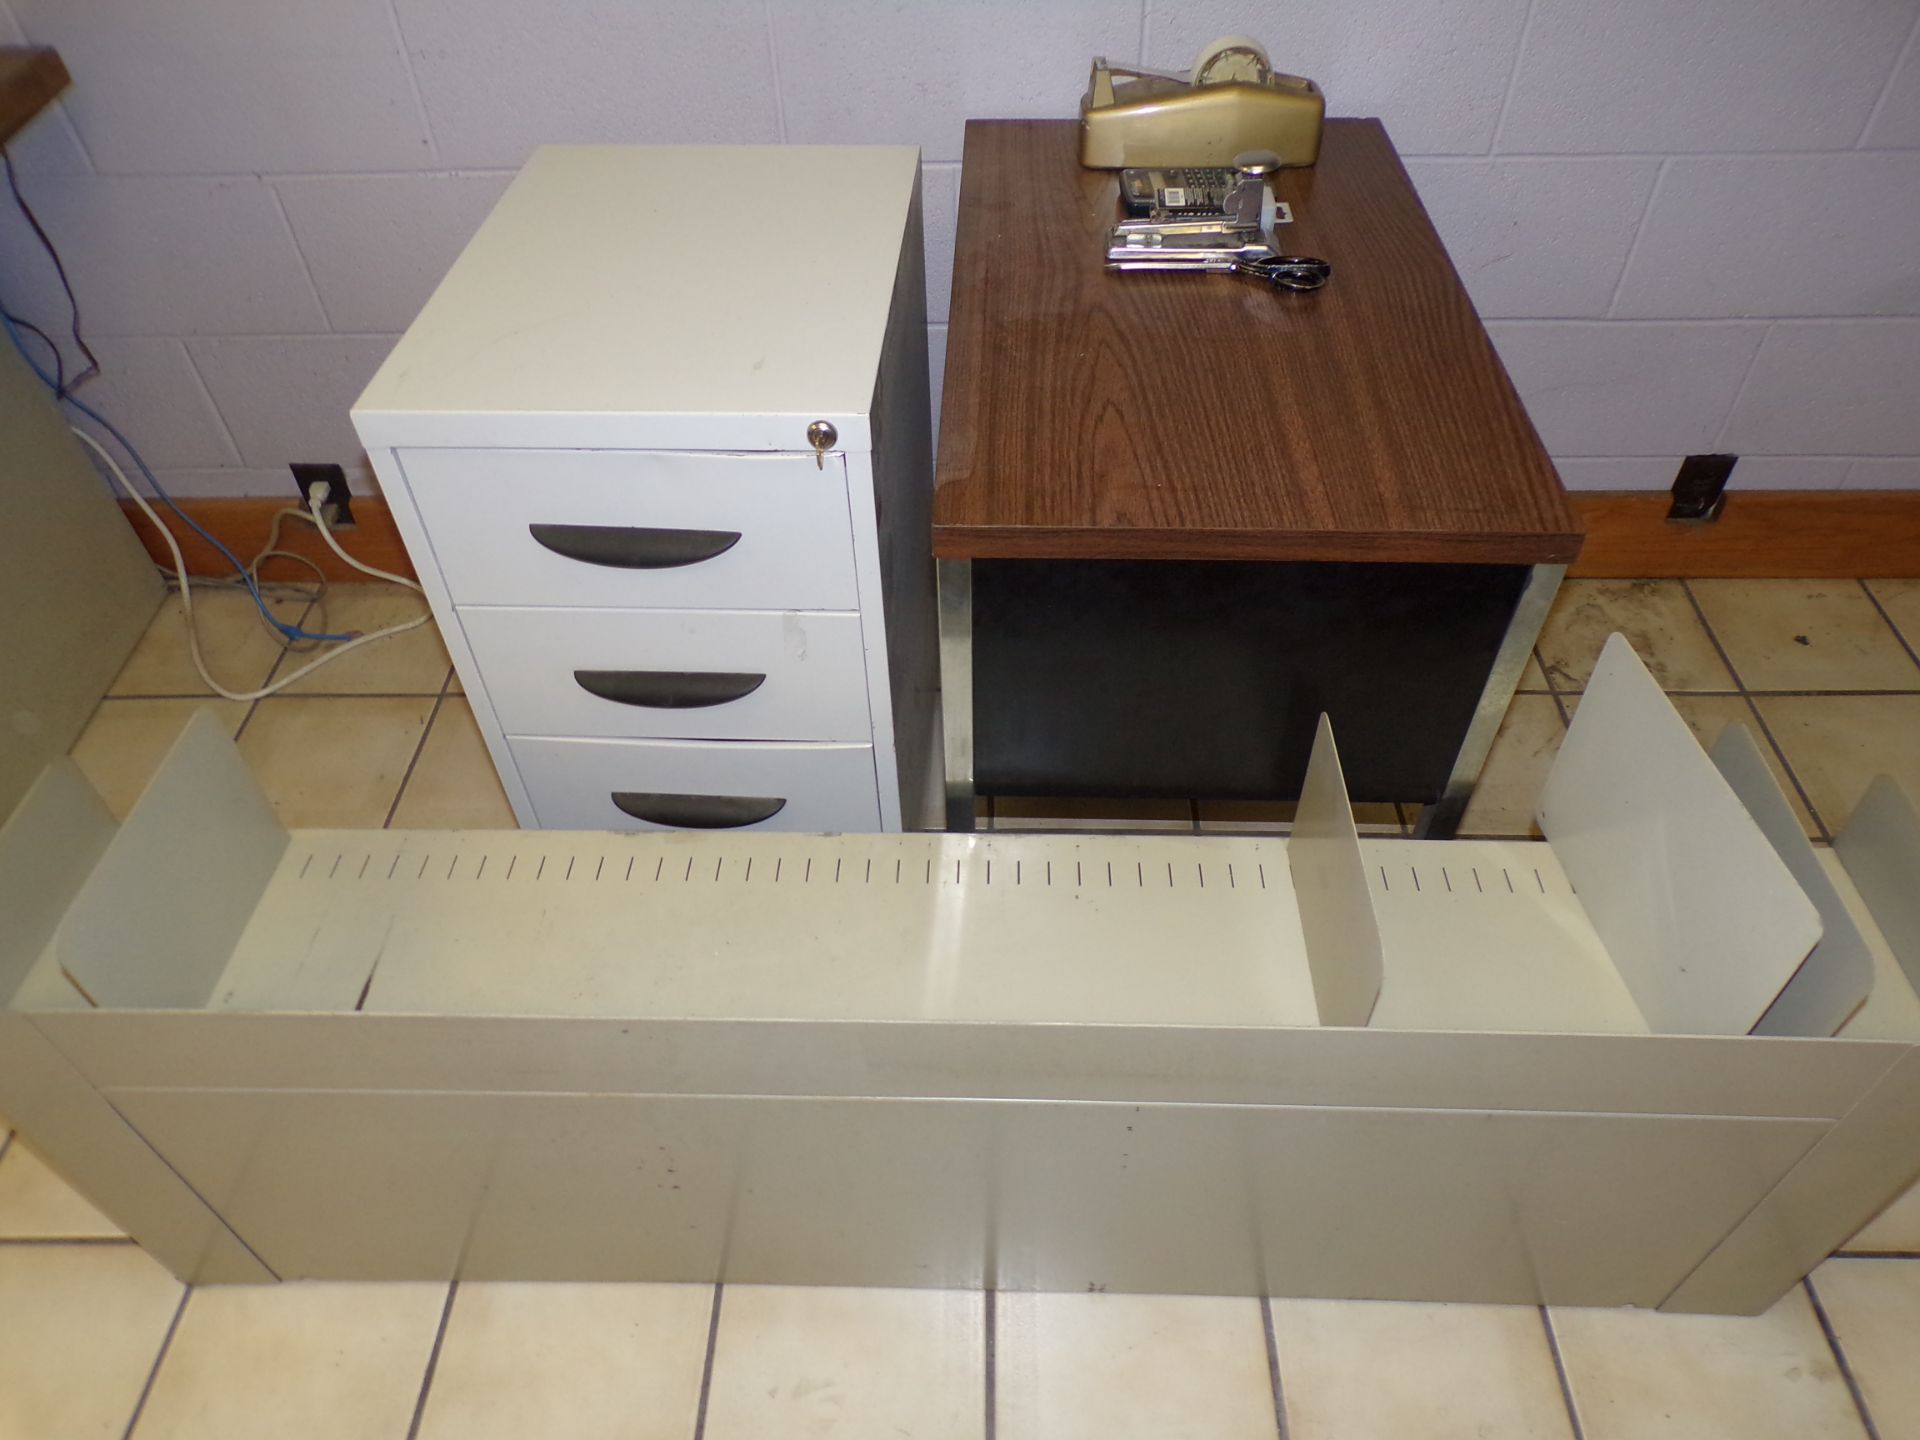 File Cabinet, printer table, shelving